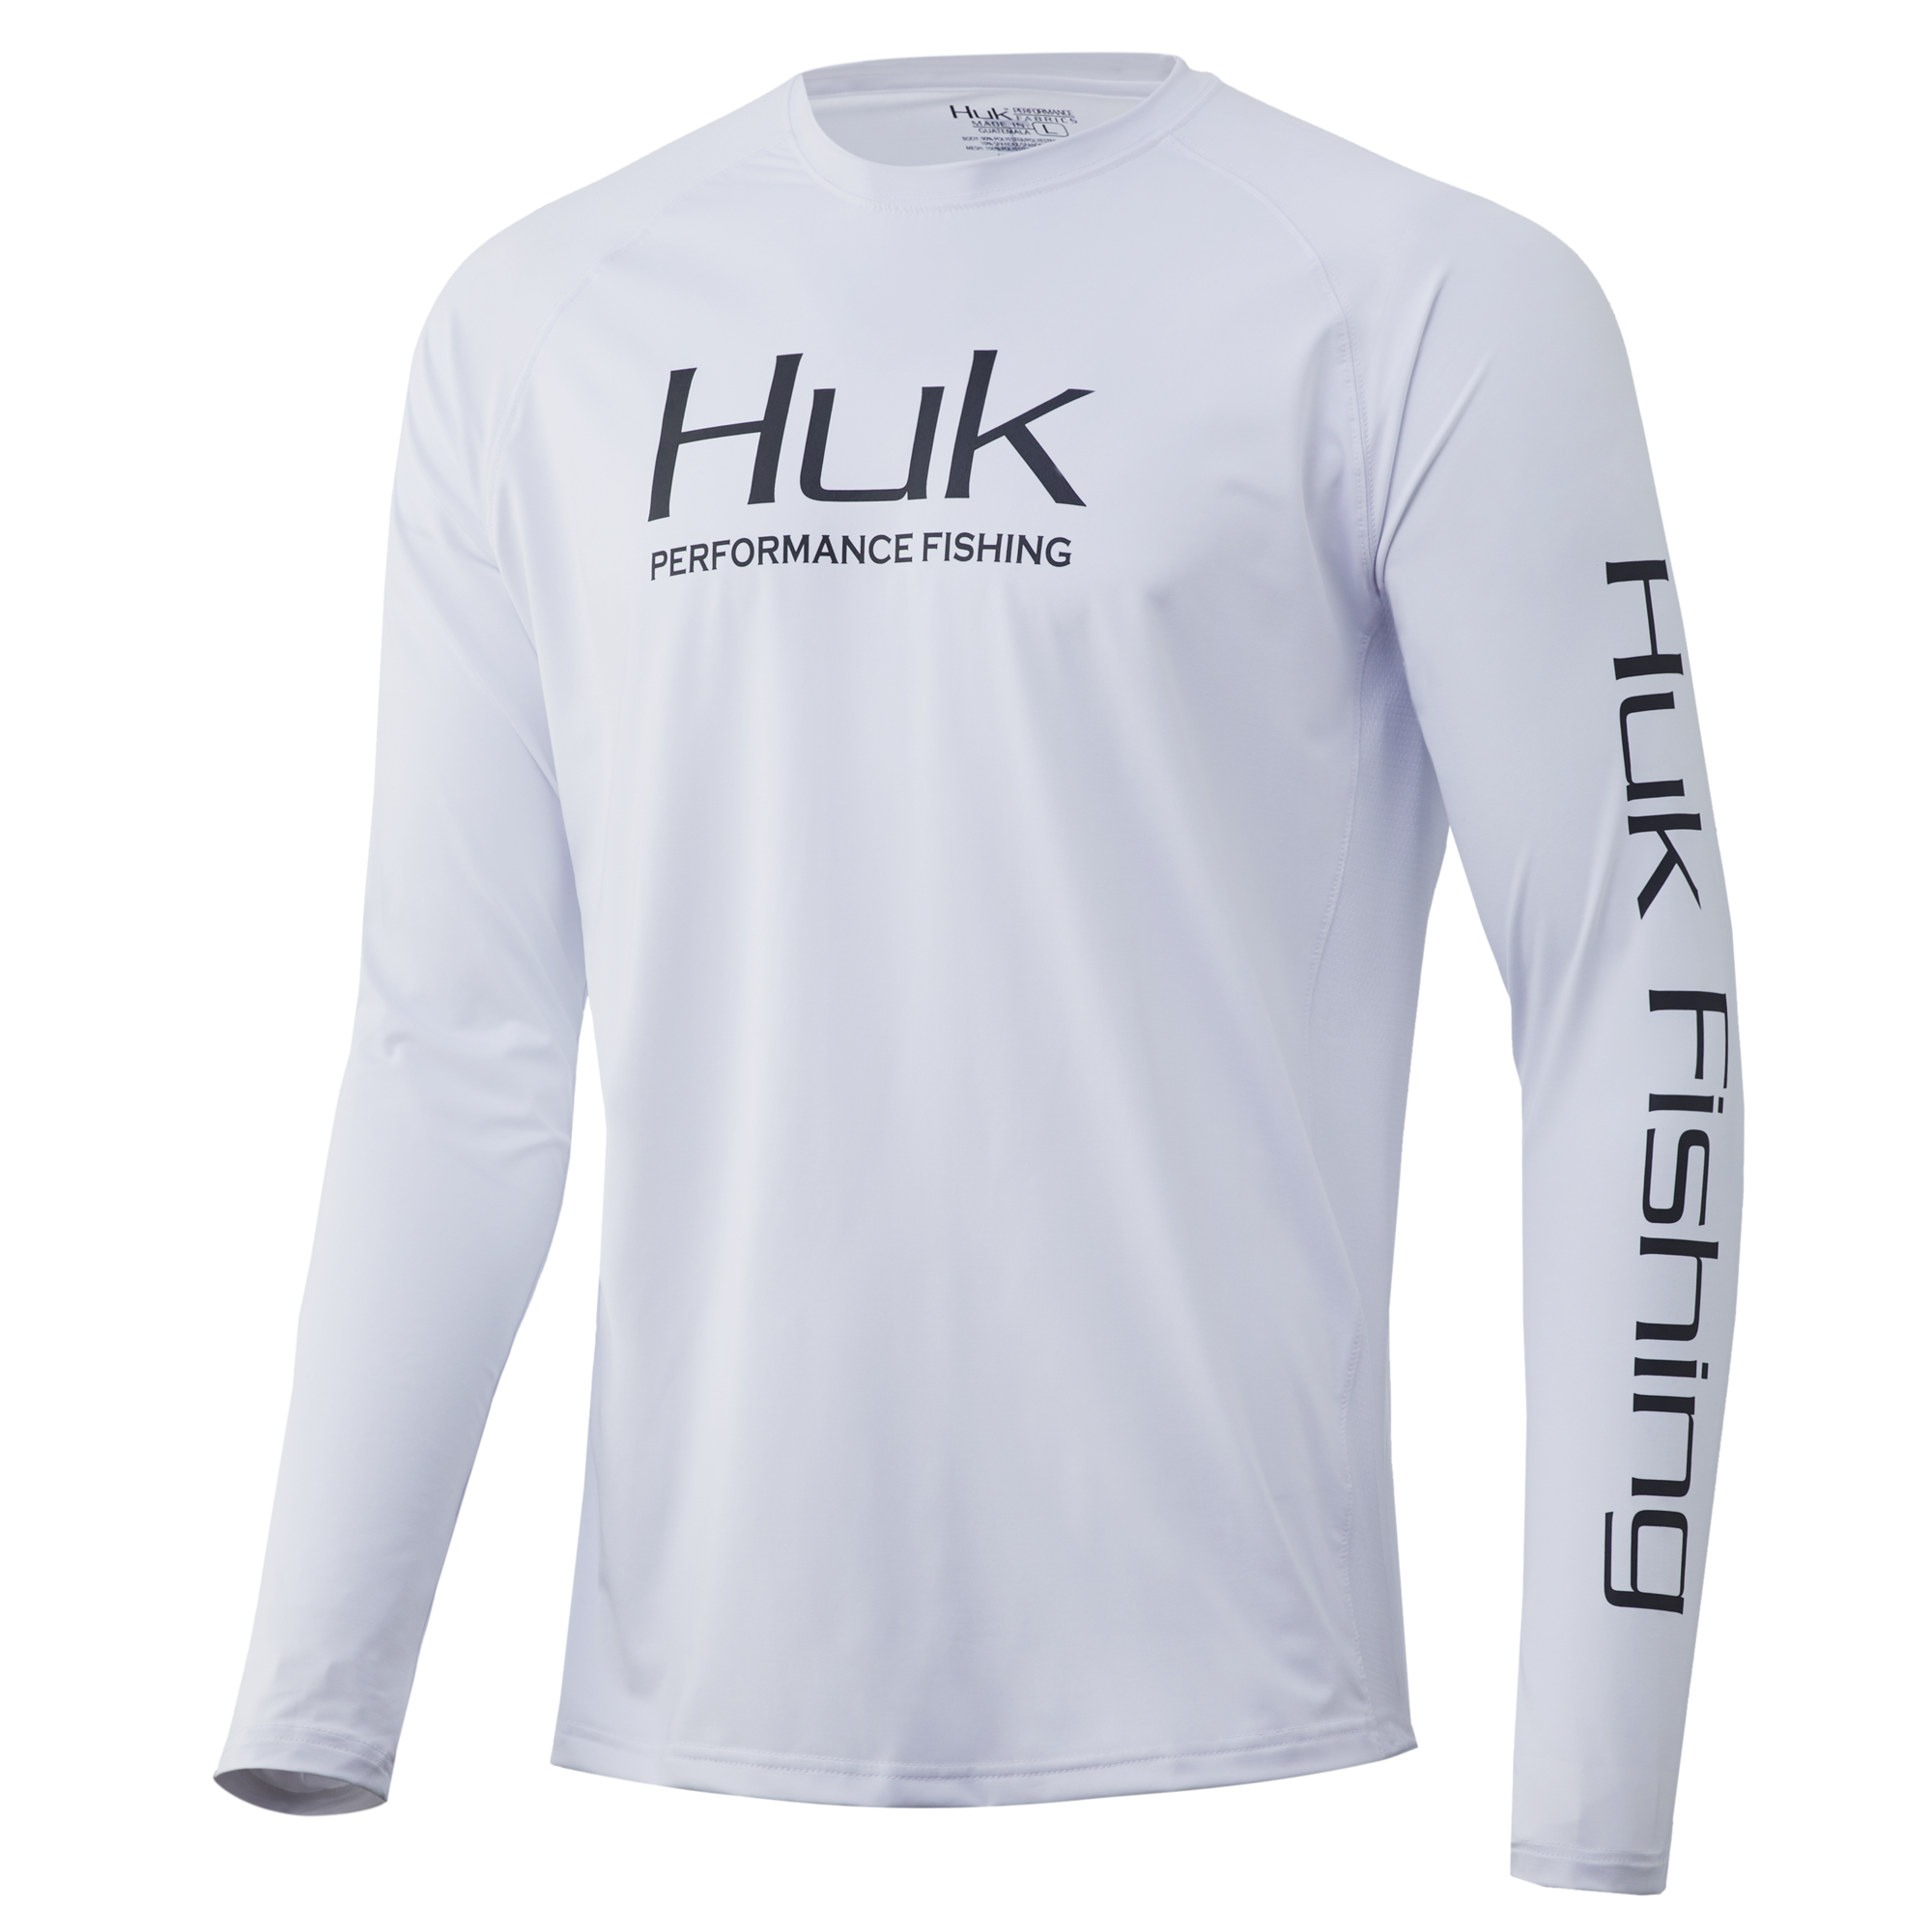 Huk Men's Pursuit Vented Long Sleeve Shirt - White - Medium